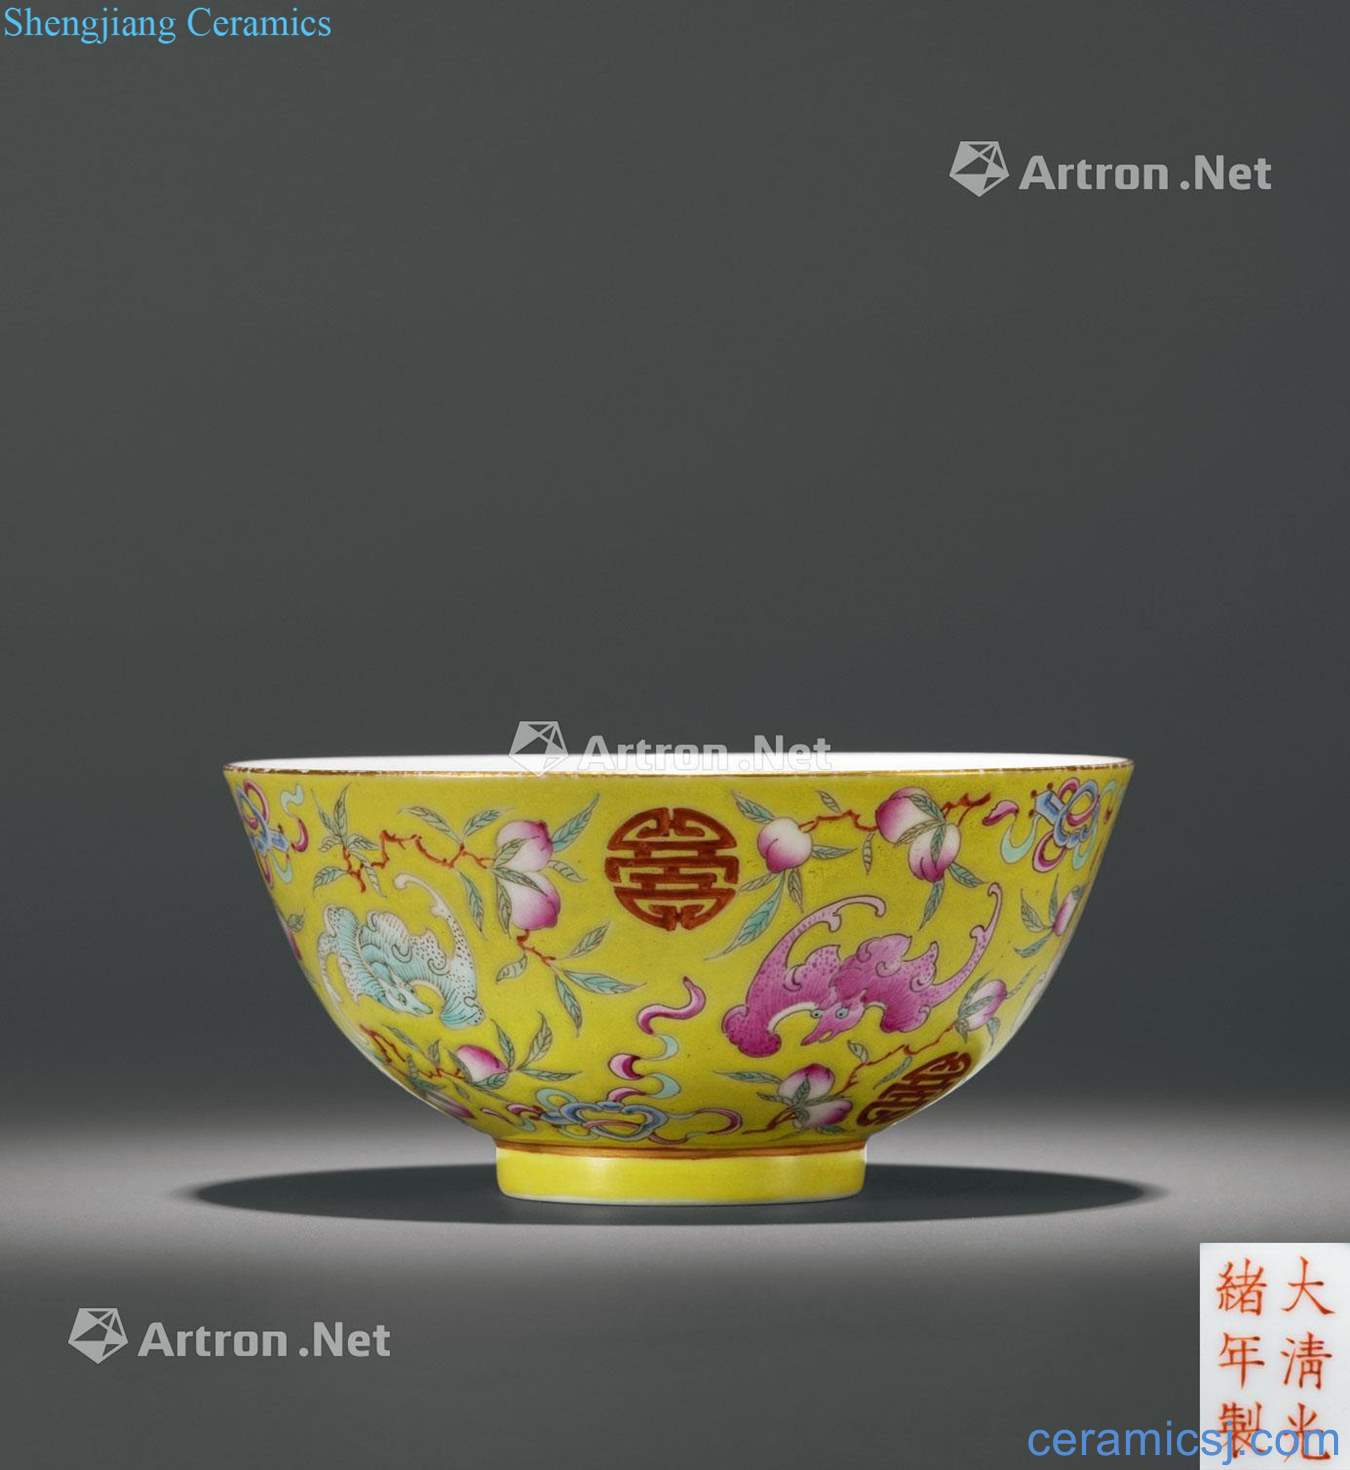 Pastel reign of qing emperor guangxu live green-splashed bowls